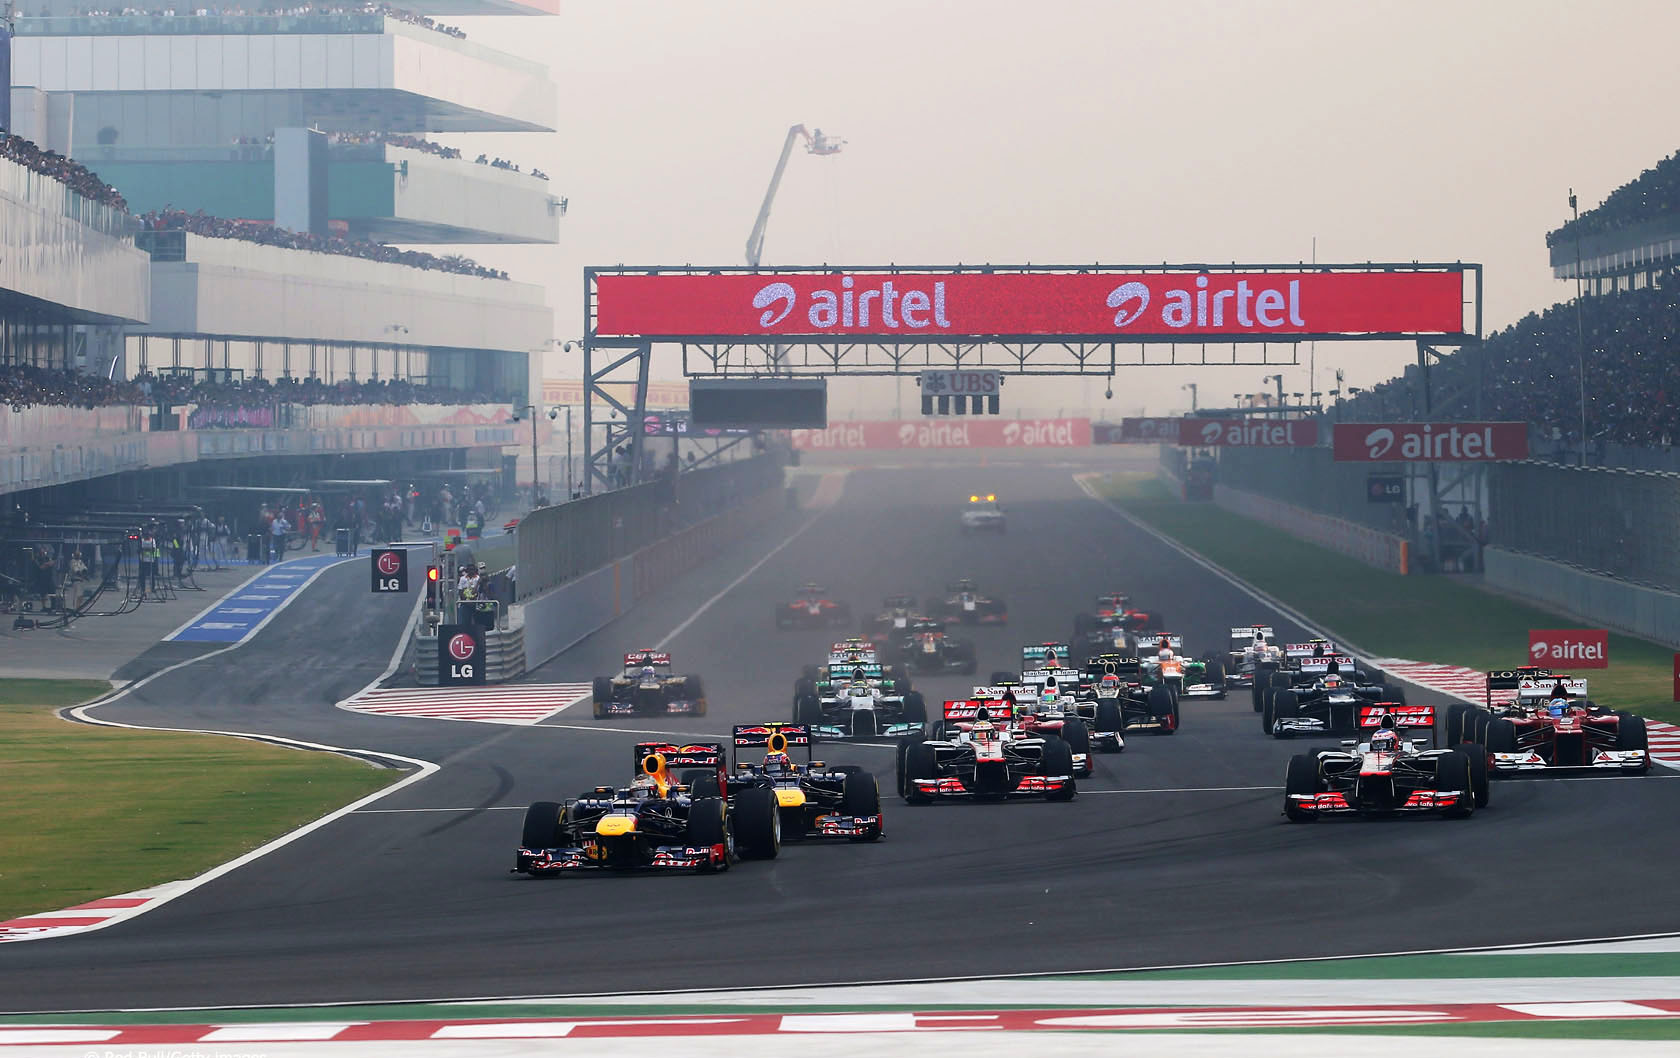 F1 may drop Indian Grand Prix in 2014